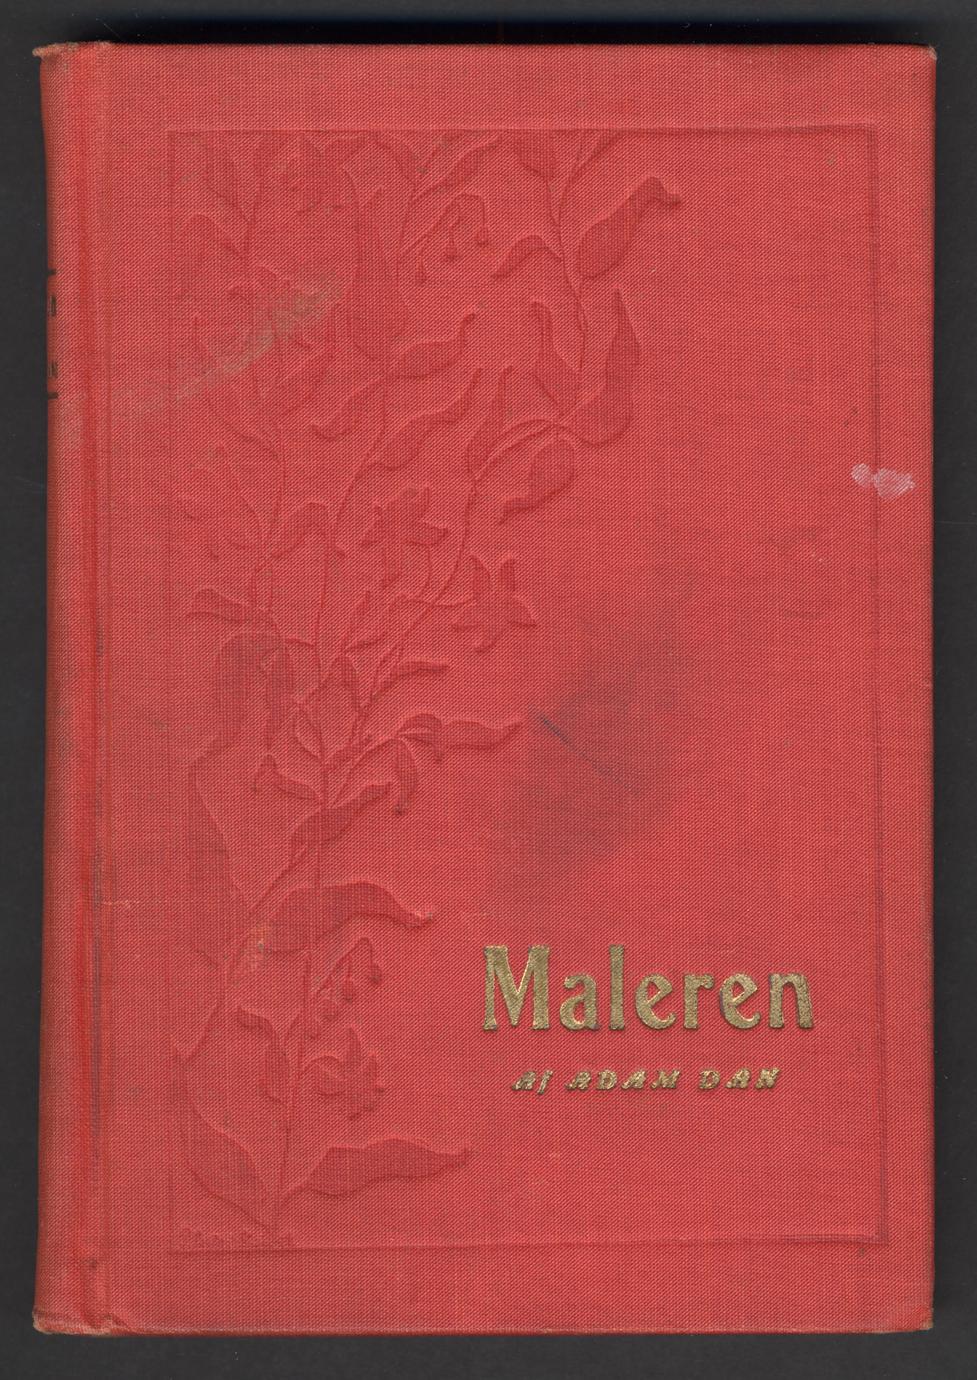 Maleren (1 of 2)